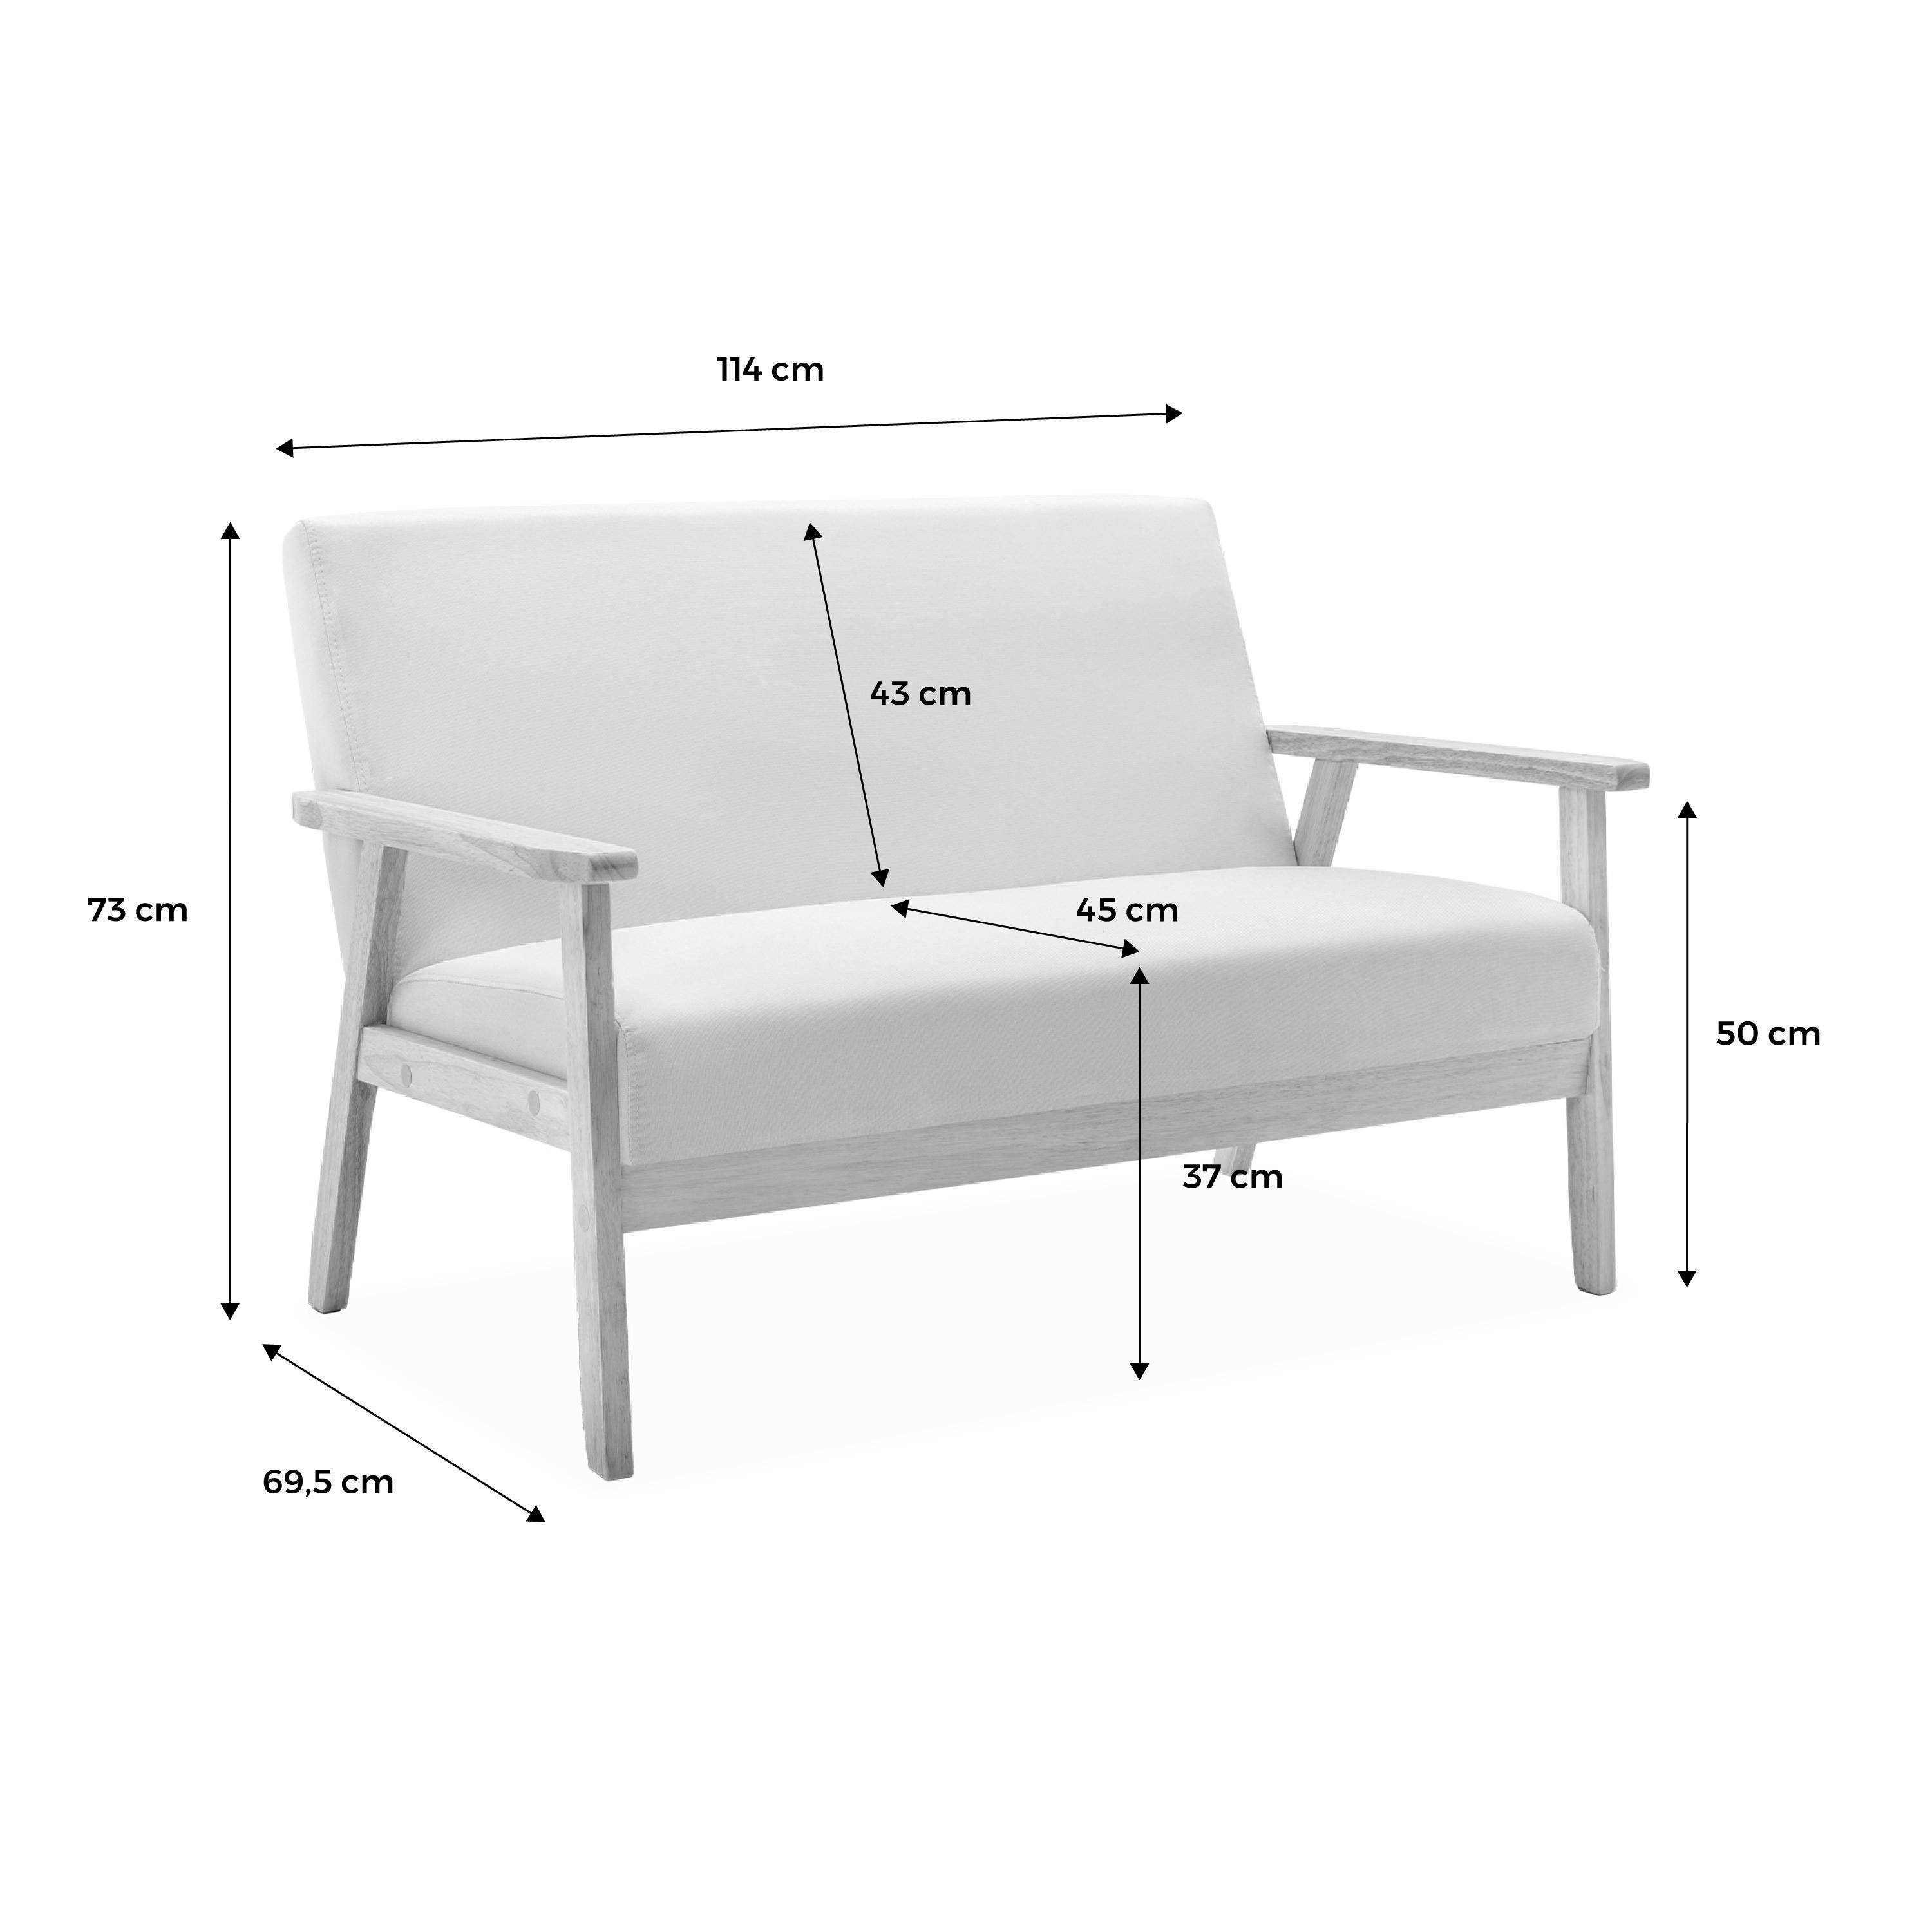 Banco y sillón de madera y tela gris oscuro, Isak, L 114 x A 69,5 x A 73 cm,sweeek,Photo8